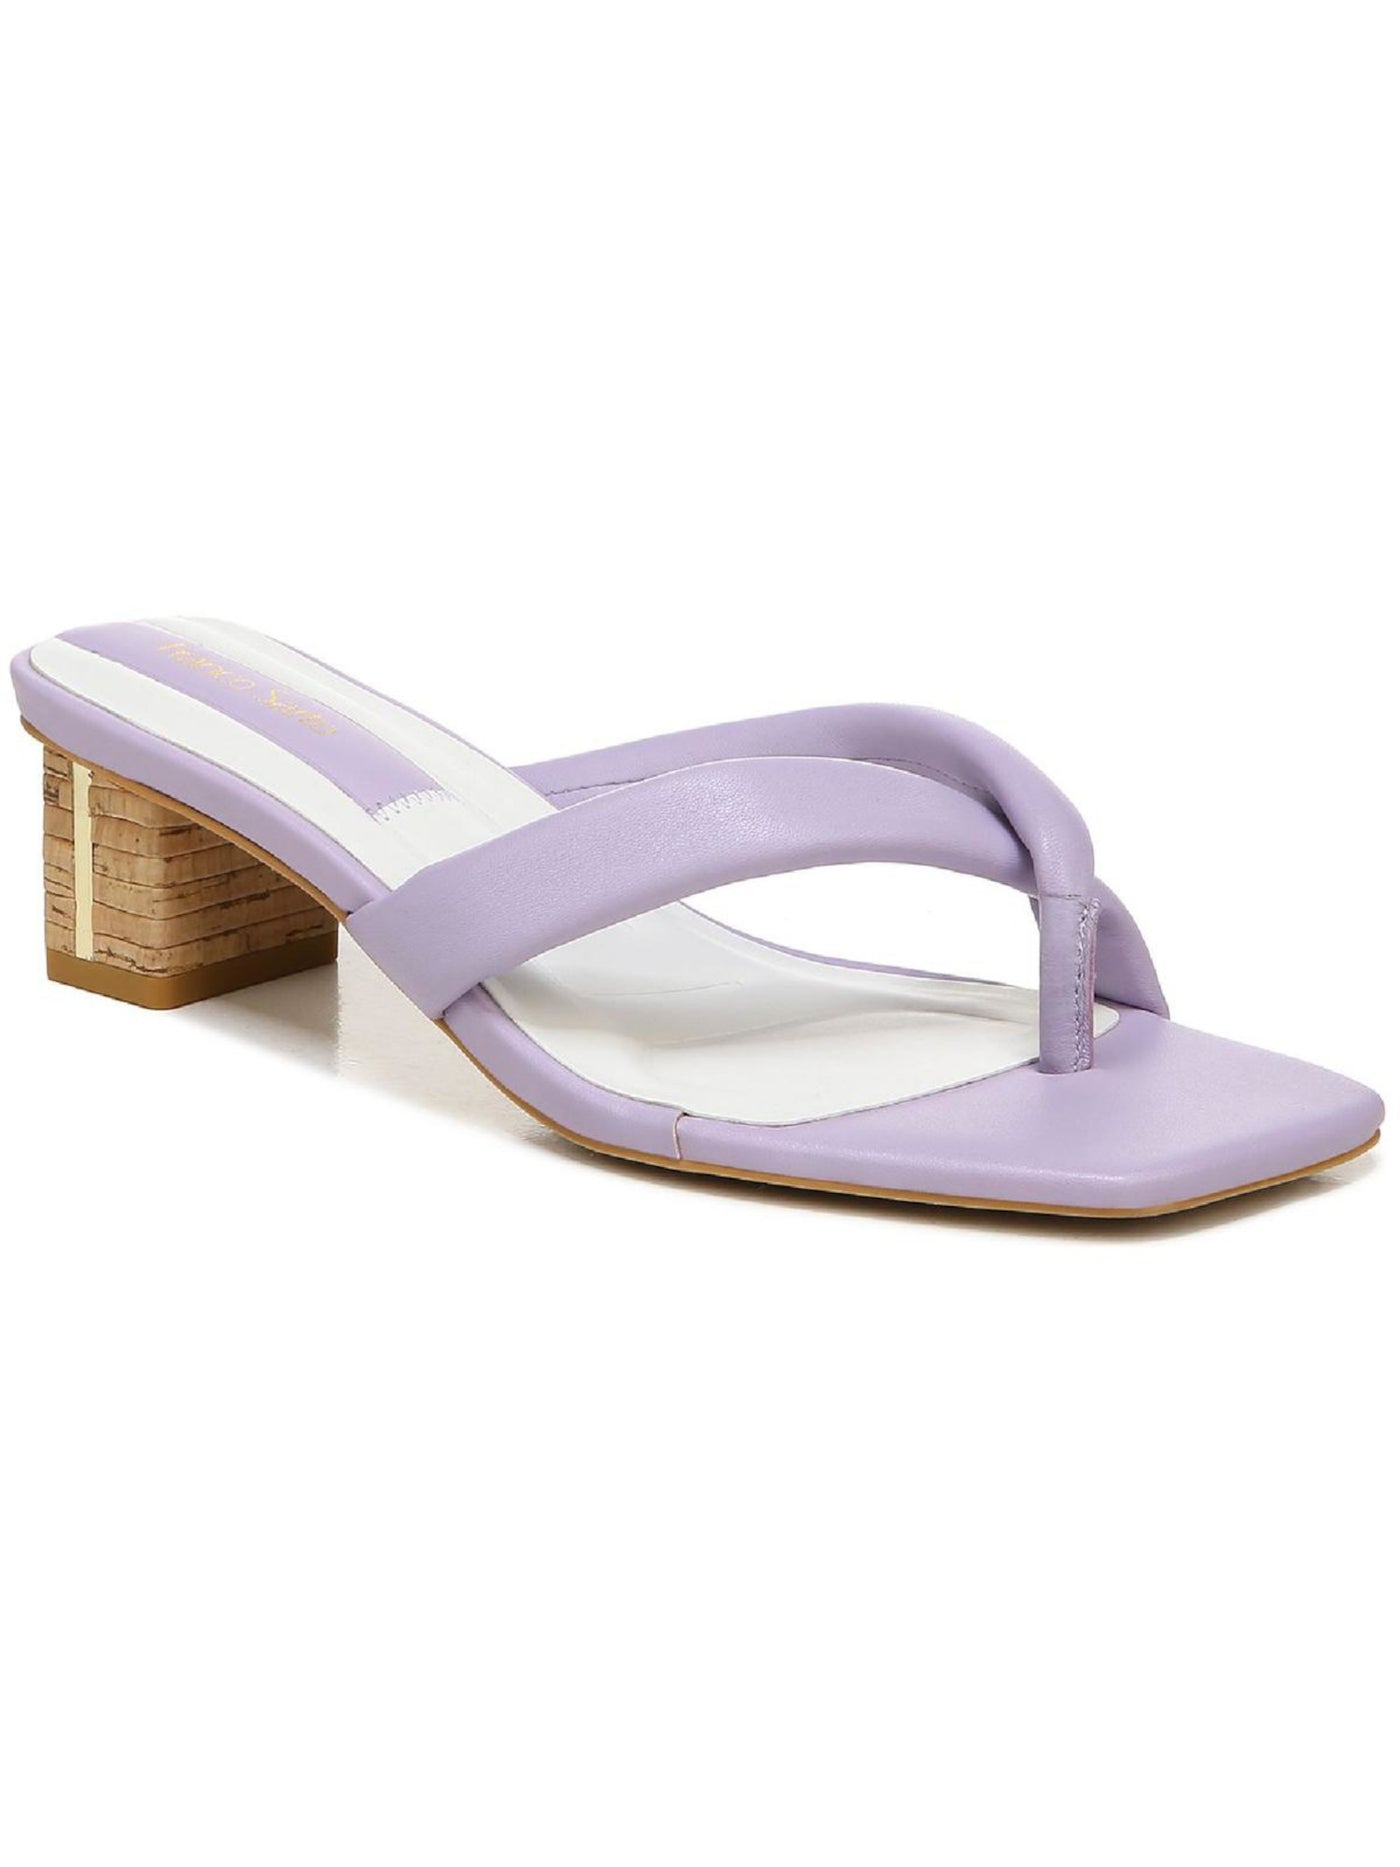 FRANCO SARTO Womens Purple Cushioned Carmella Open Toe Block Heel Slip On Leather Heeled Sandal 6.5 M